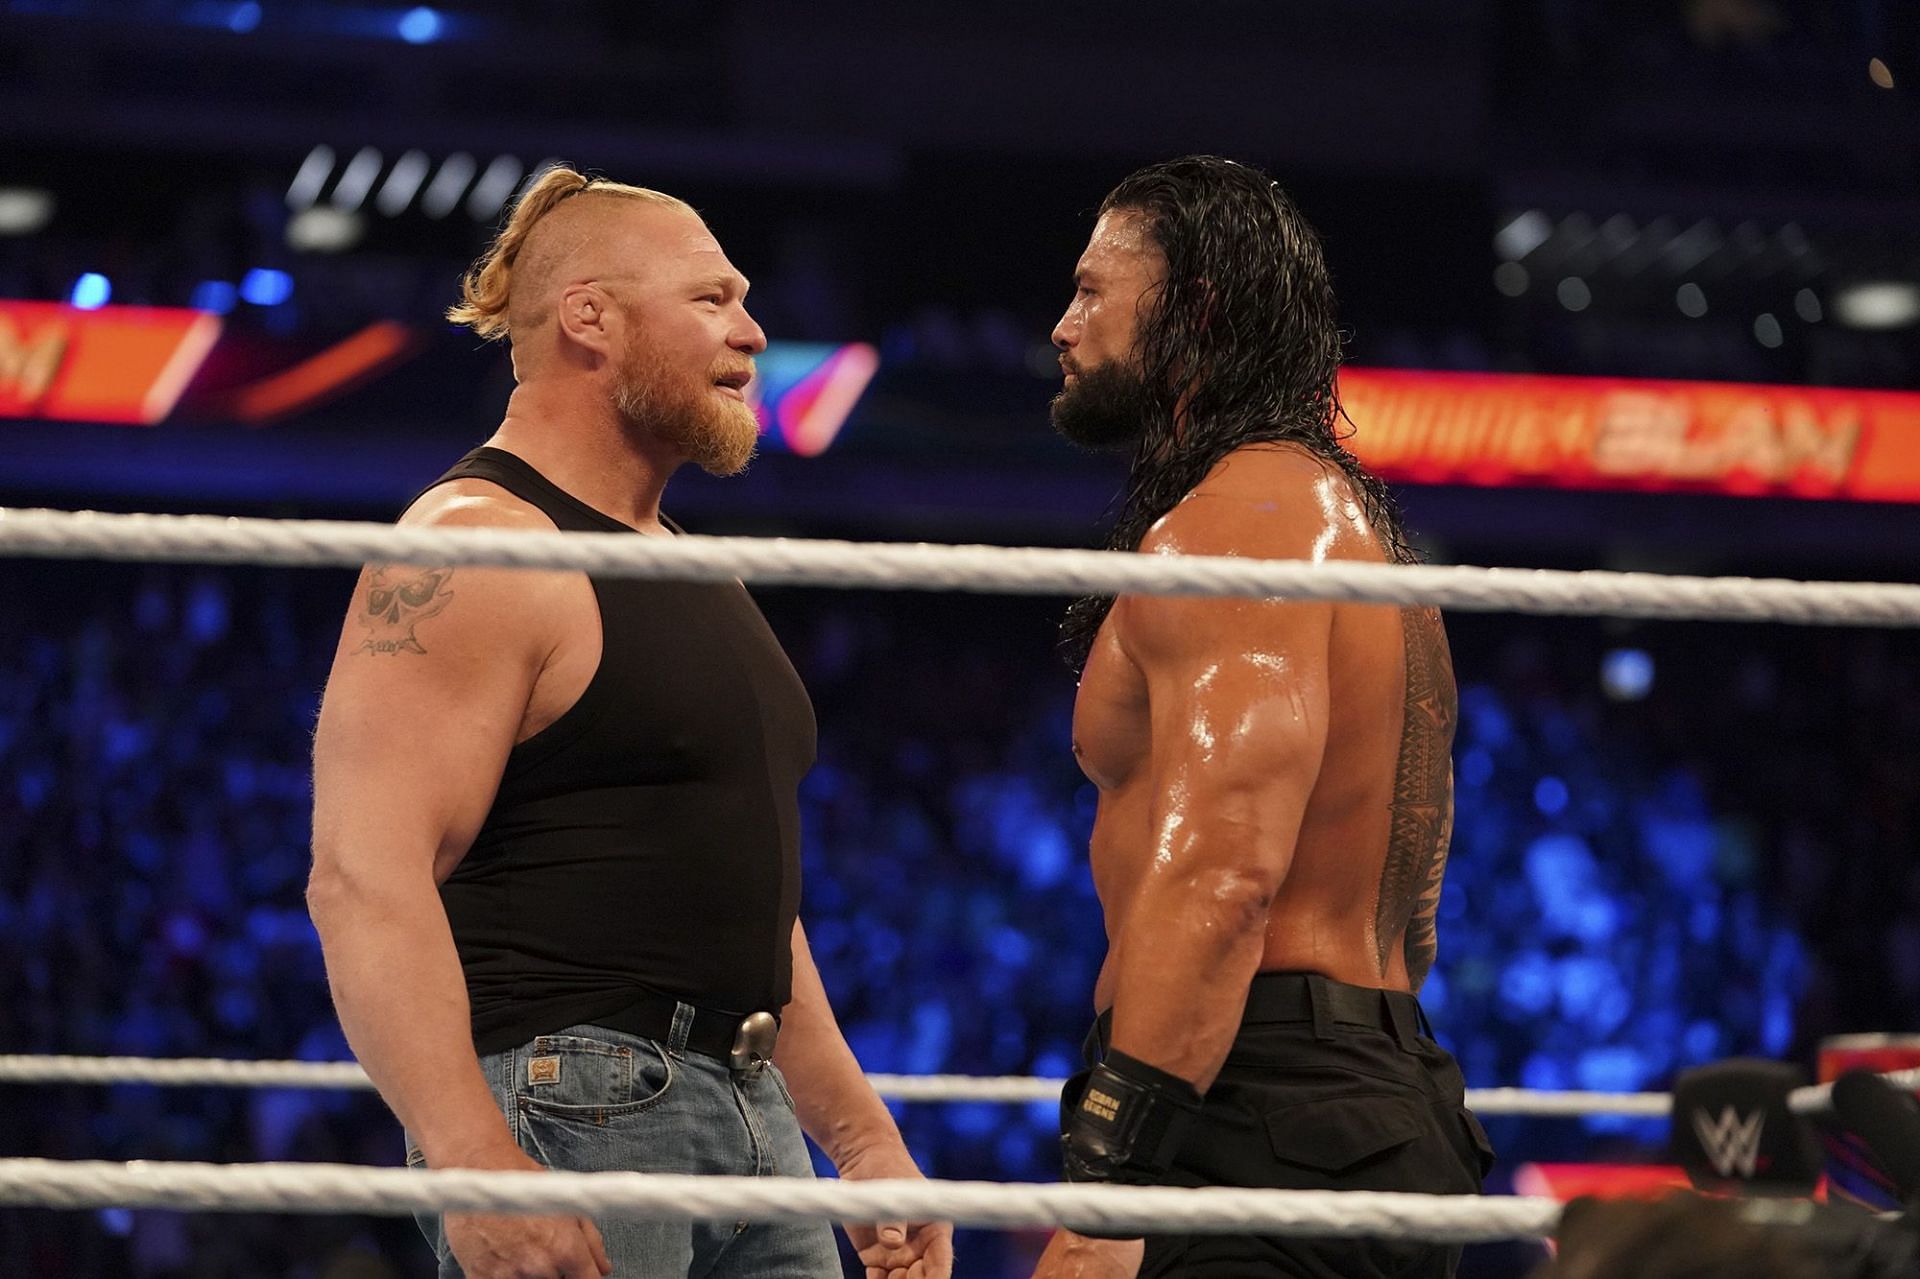 Roman Reigns and Brock Lesnar will meet again at SummerSlam